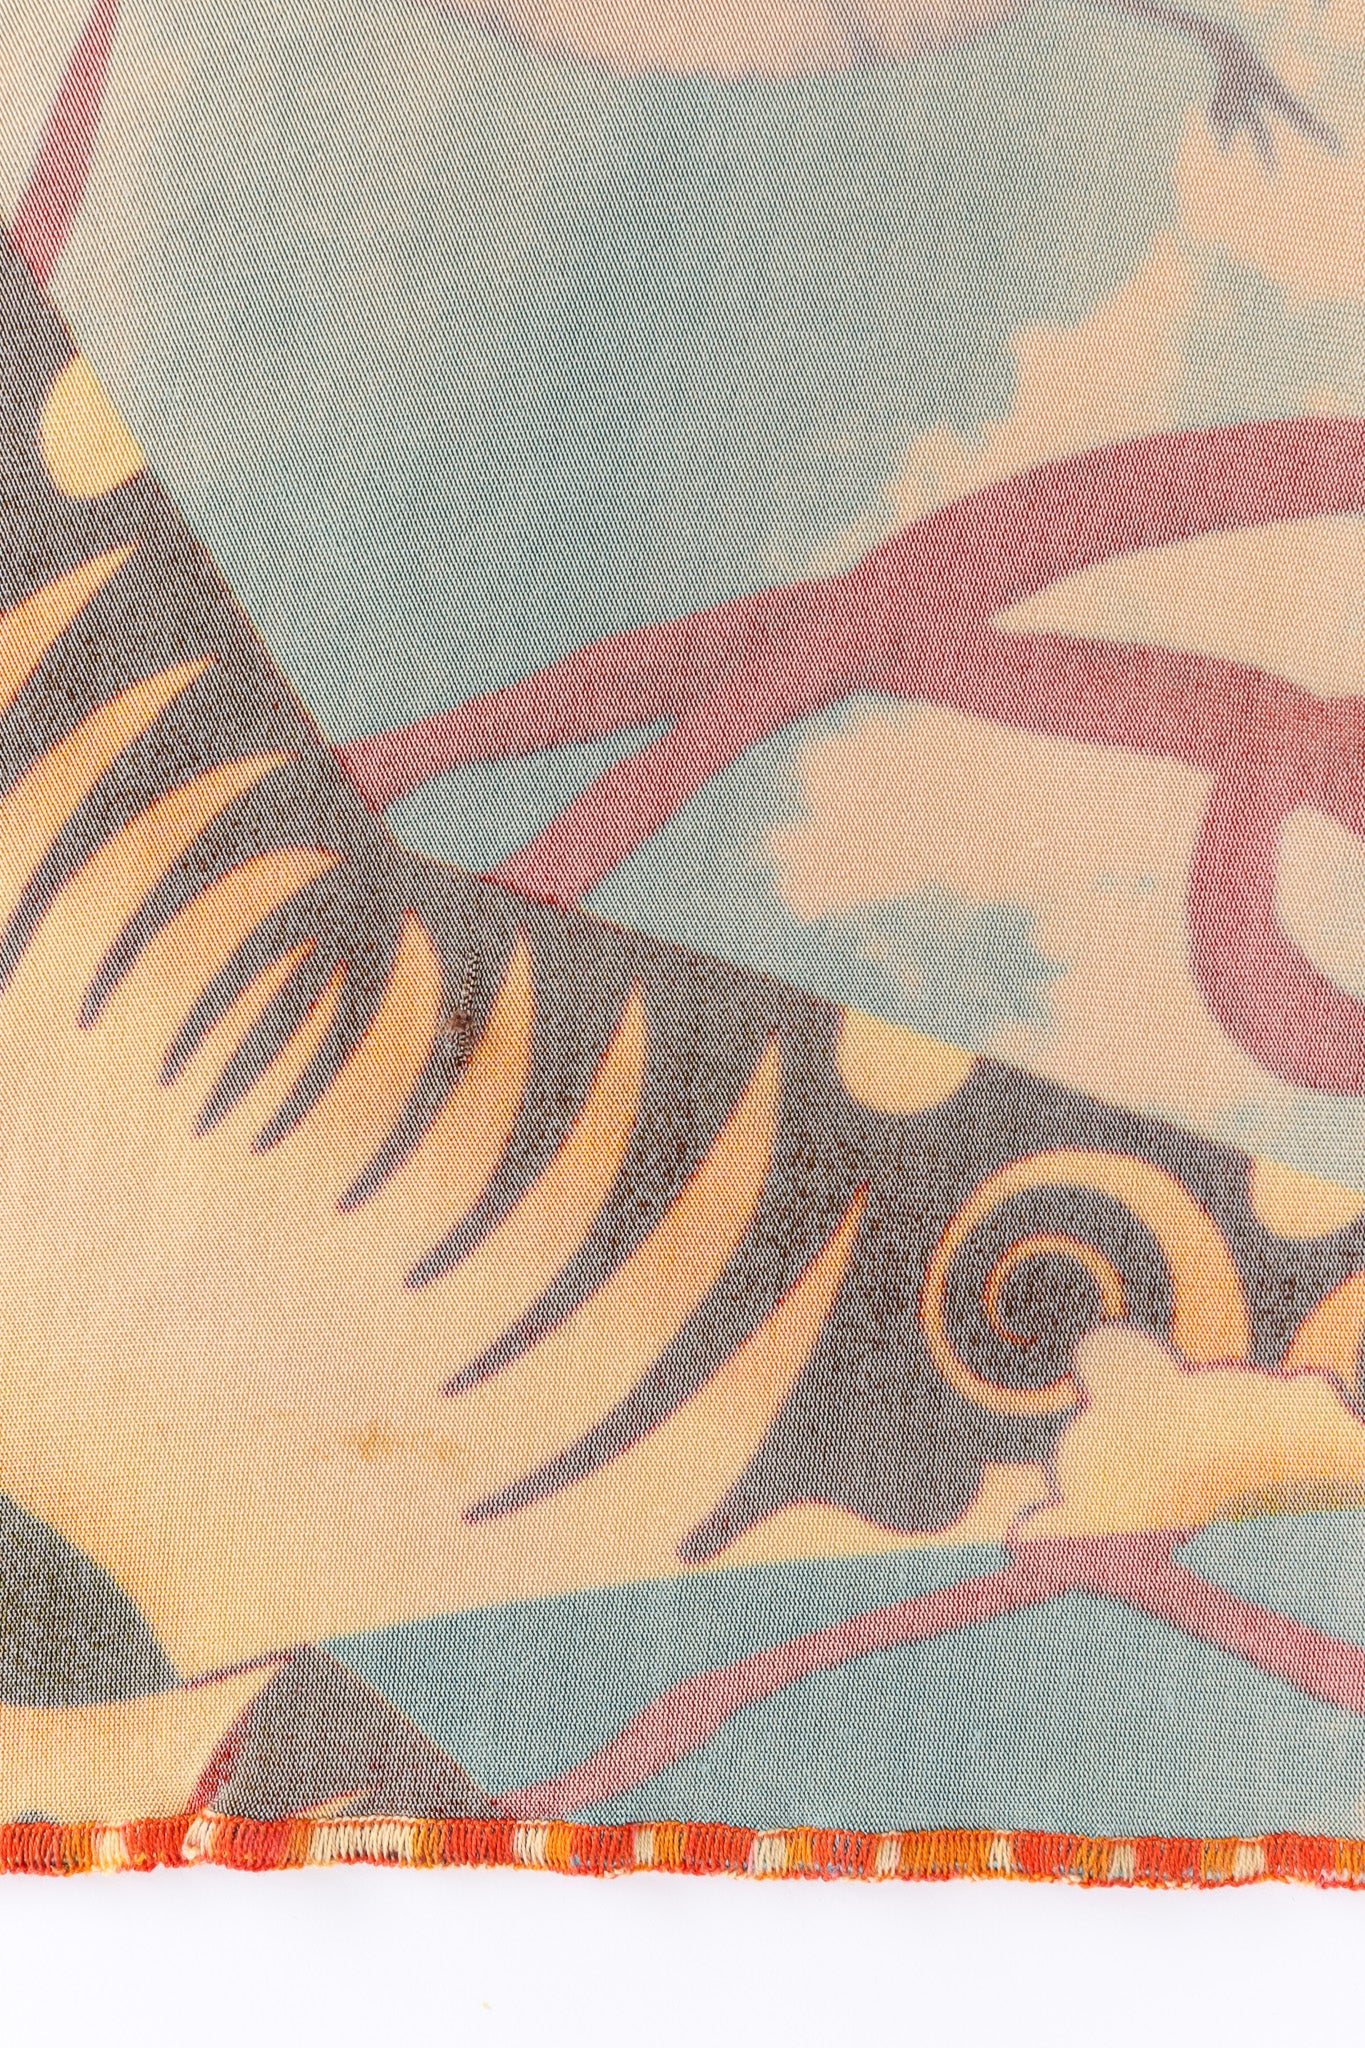 Vintage Jean Paul Gaultier Abstract Sky Kite Poncho Top back R hem snag @ Recess LA